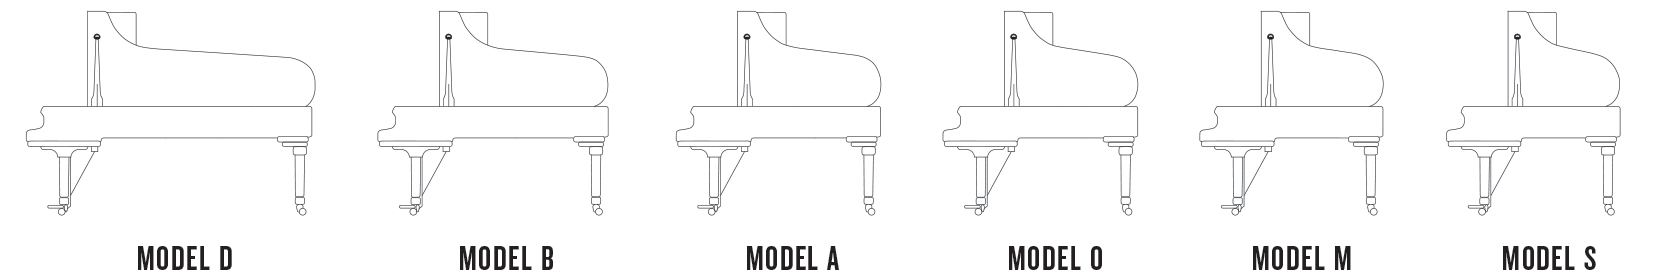 Piano Models